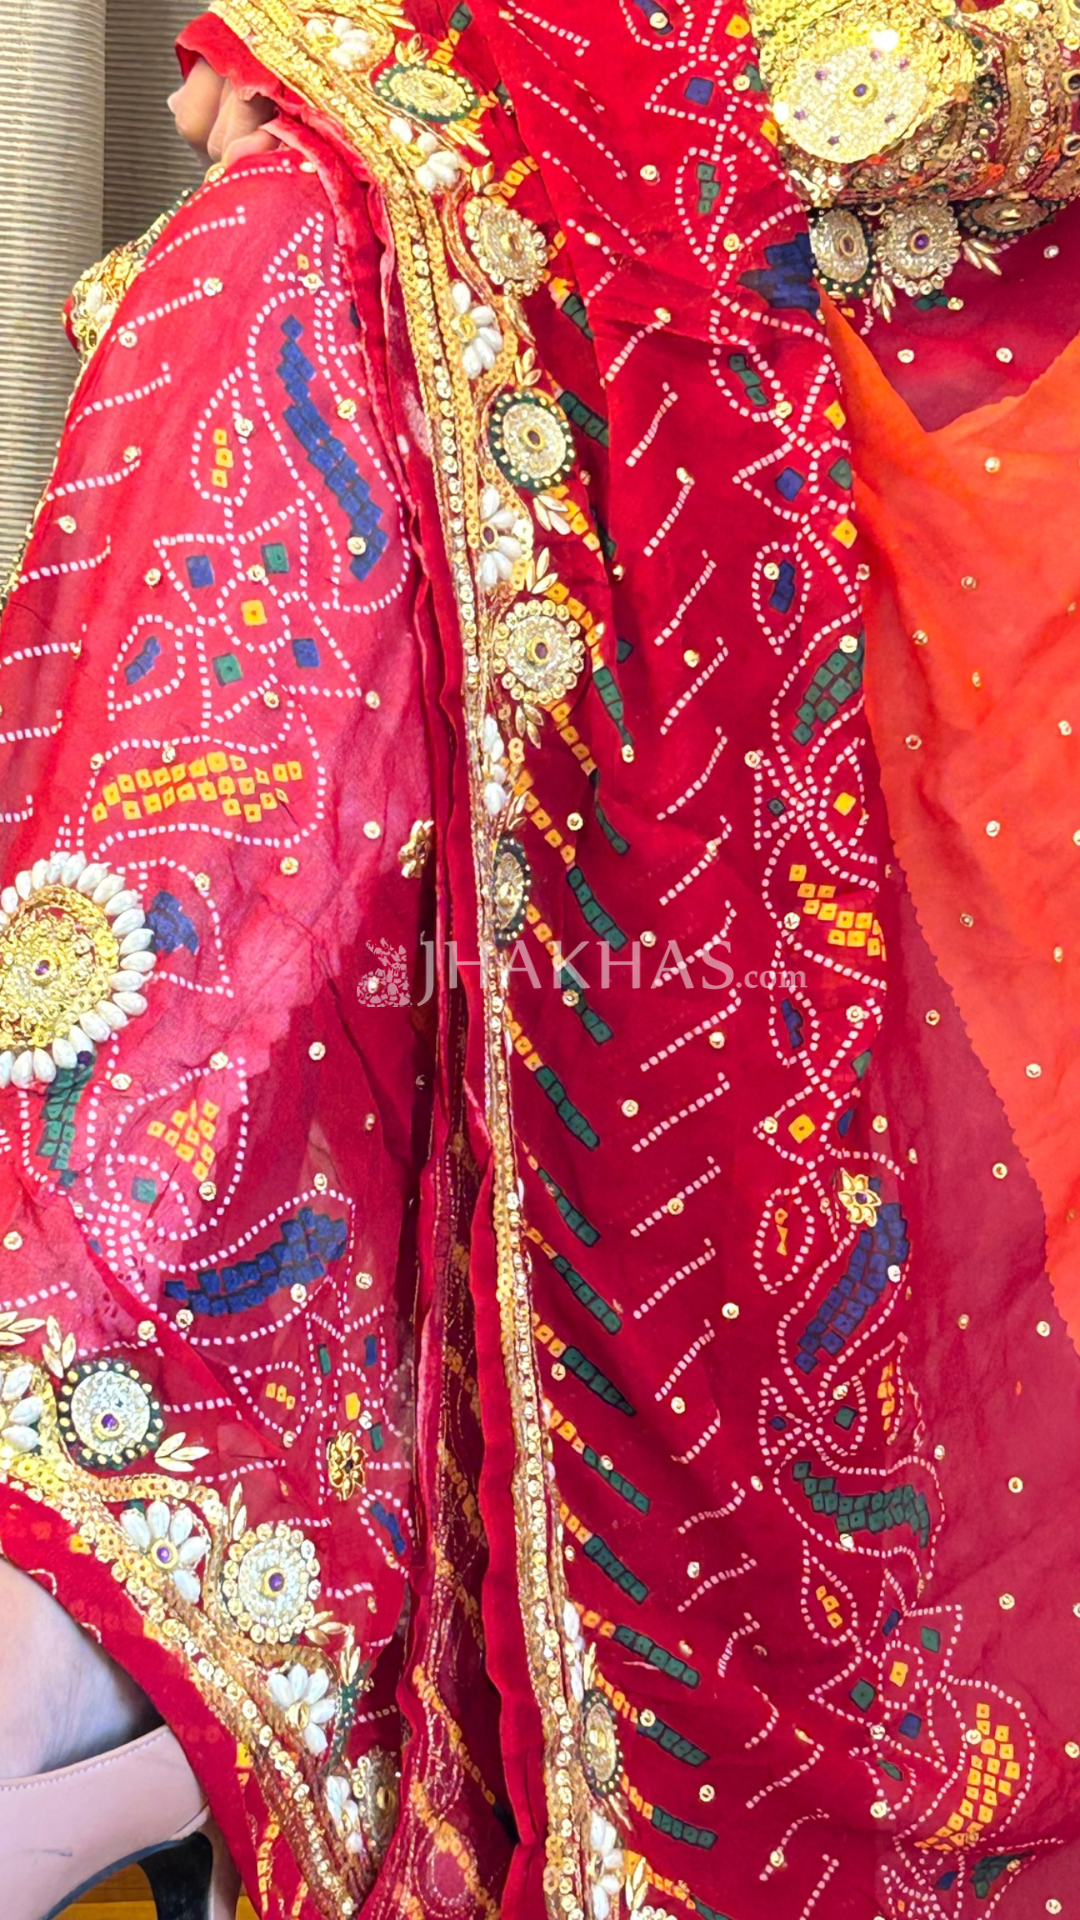 Buy Red and Orange Bandhej Marwadi chunri Online For Bride 